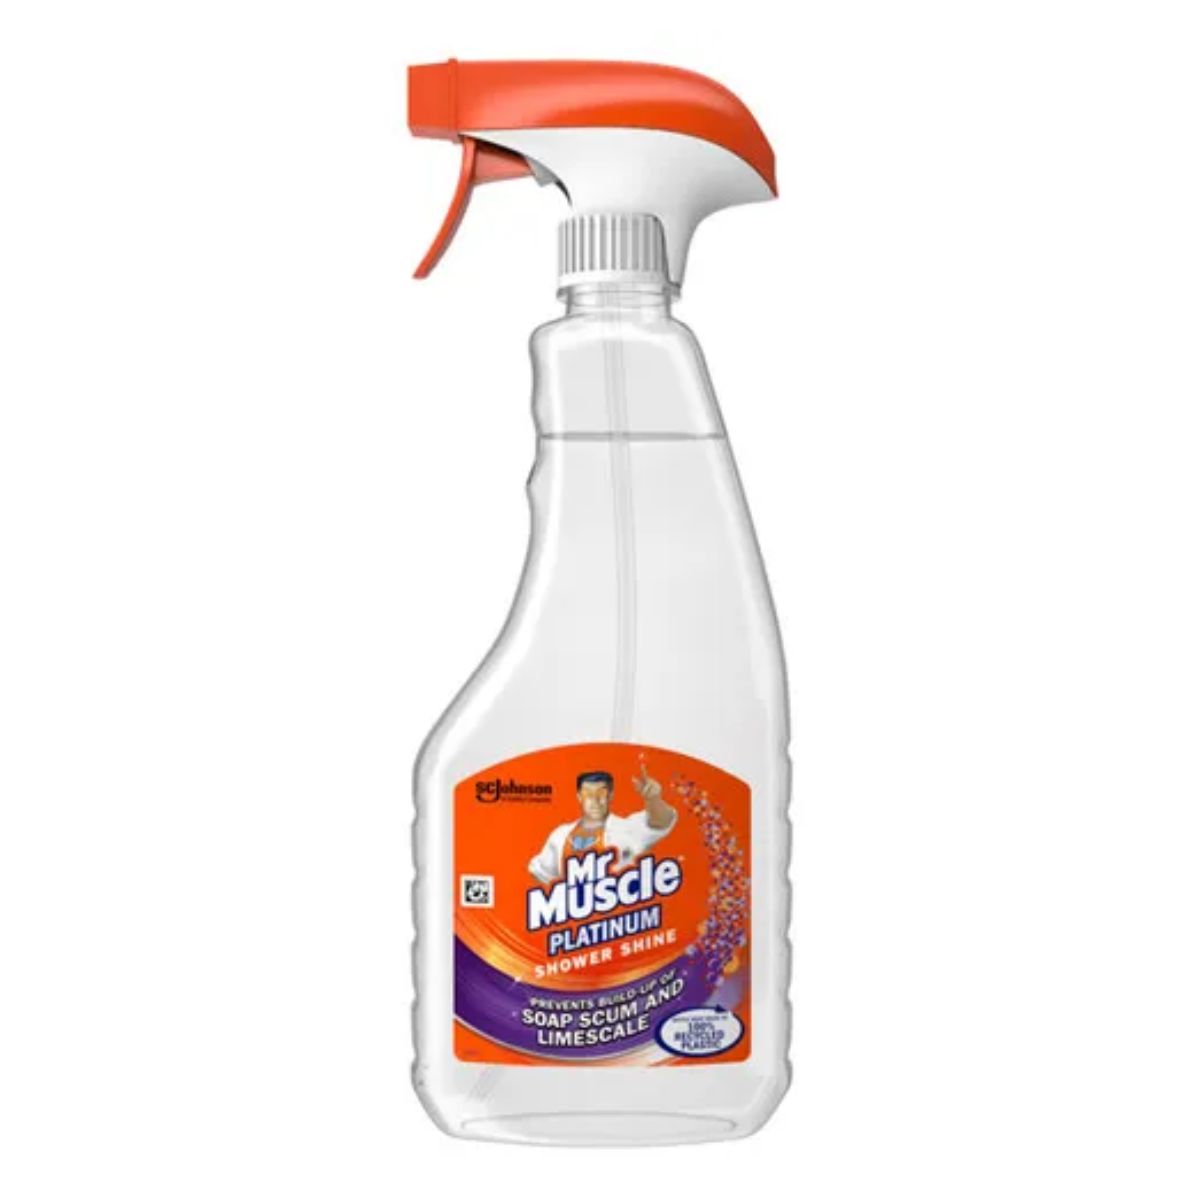 A bottle of Mr Muscle - Platinum Shower Trigger - 750ml with an orange sprayer.